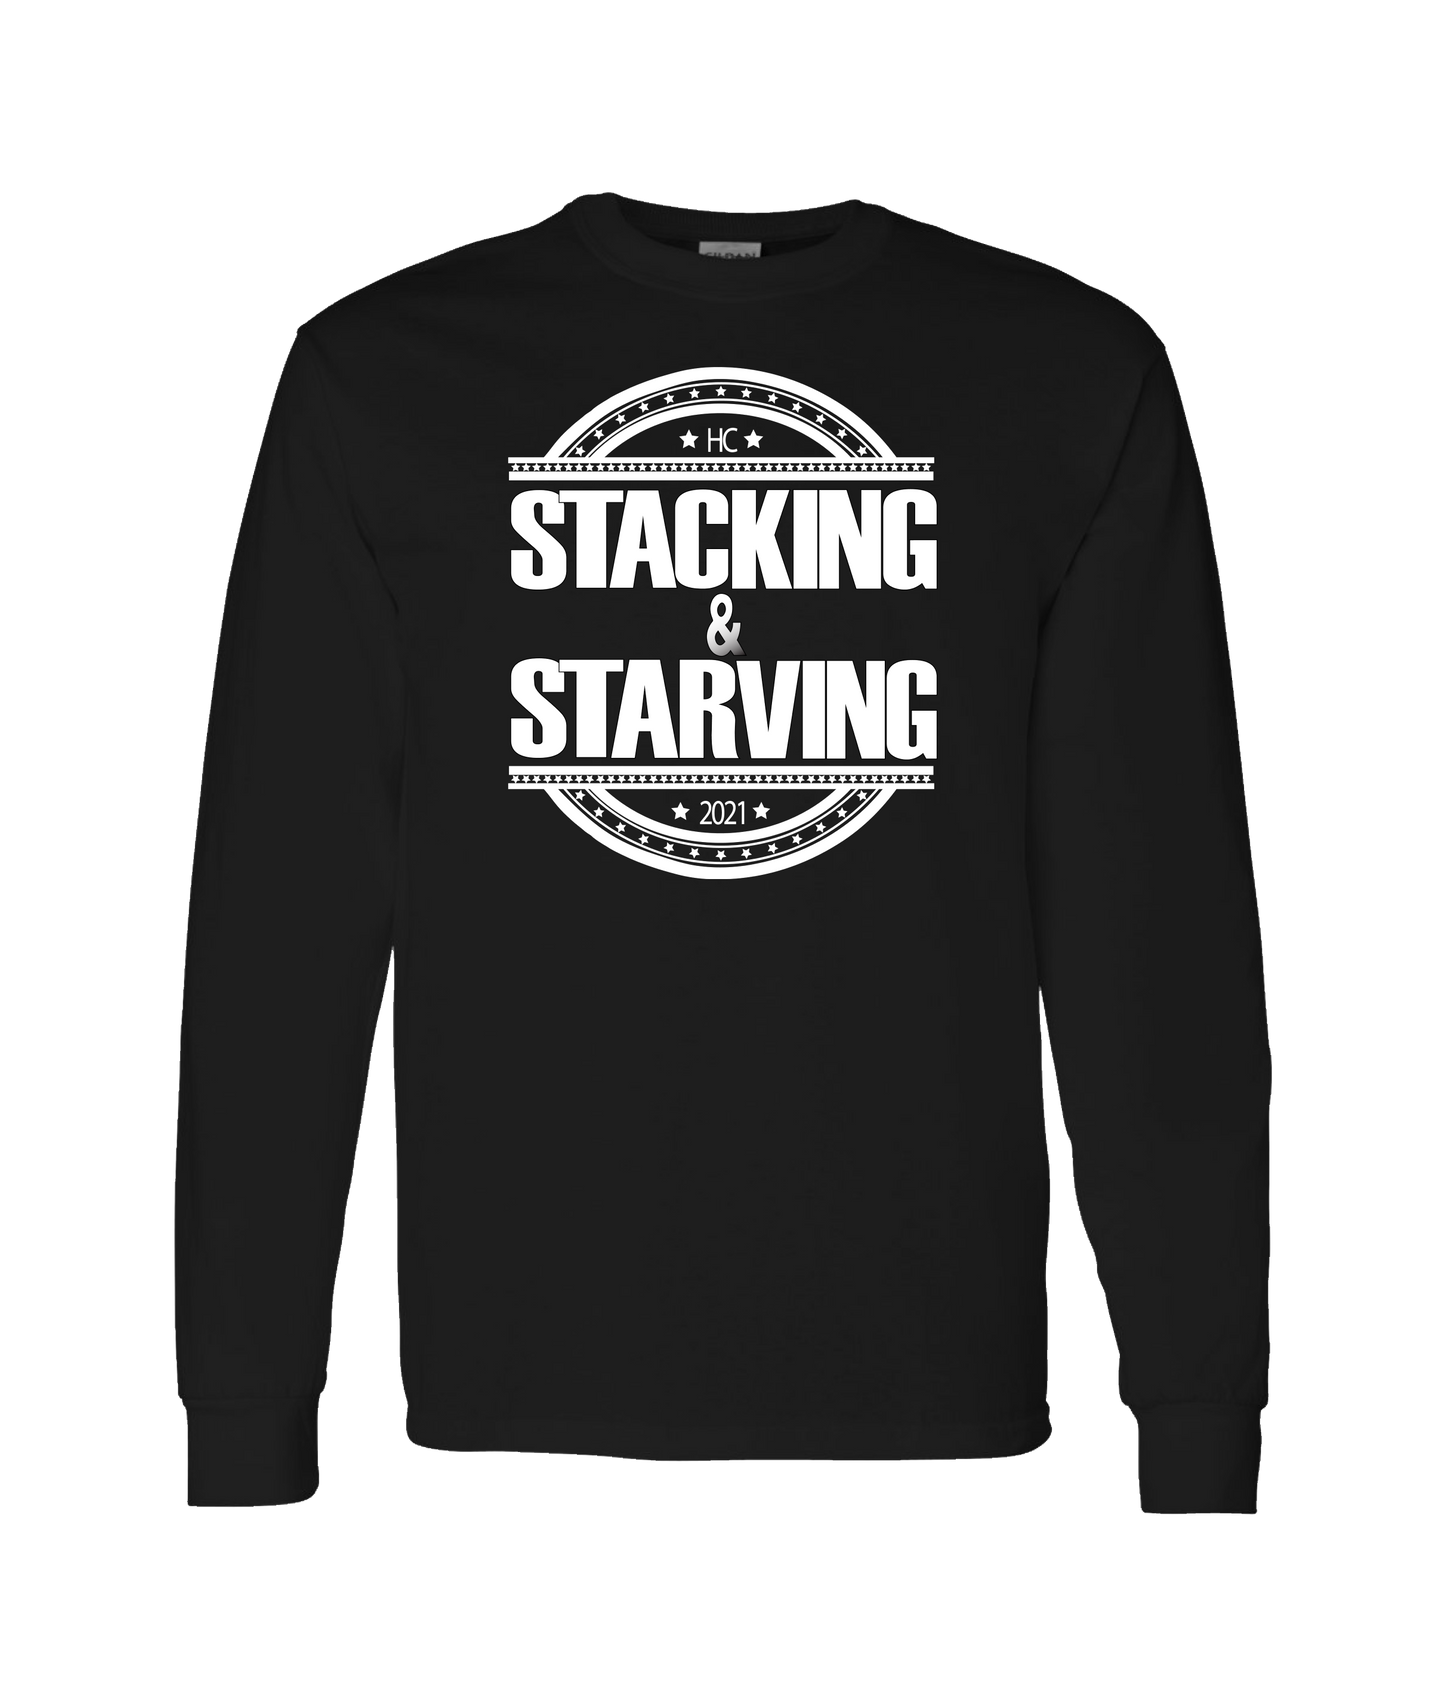 A1 Yolaman - Stacking & Starving - Black Long Sleeve T